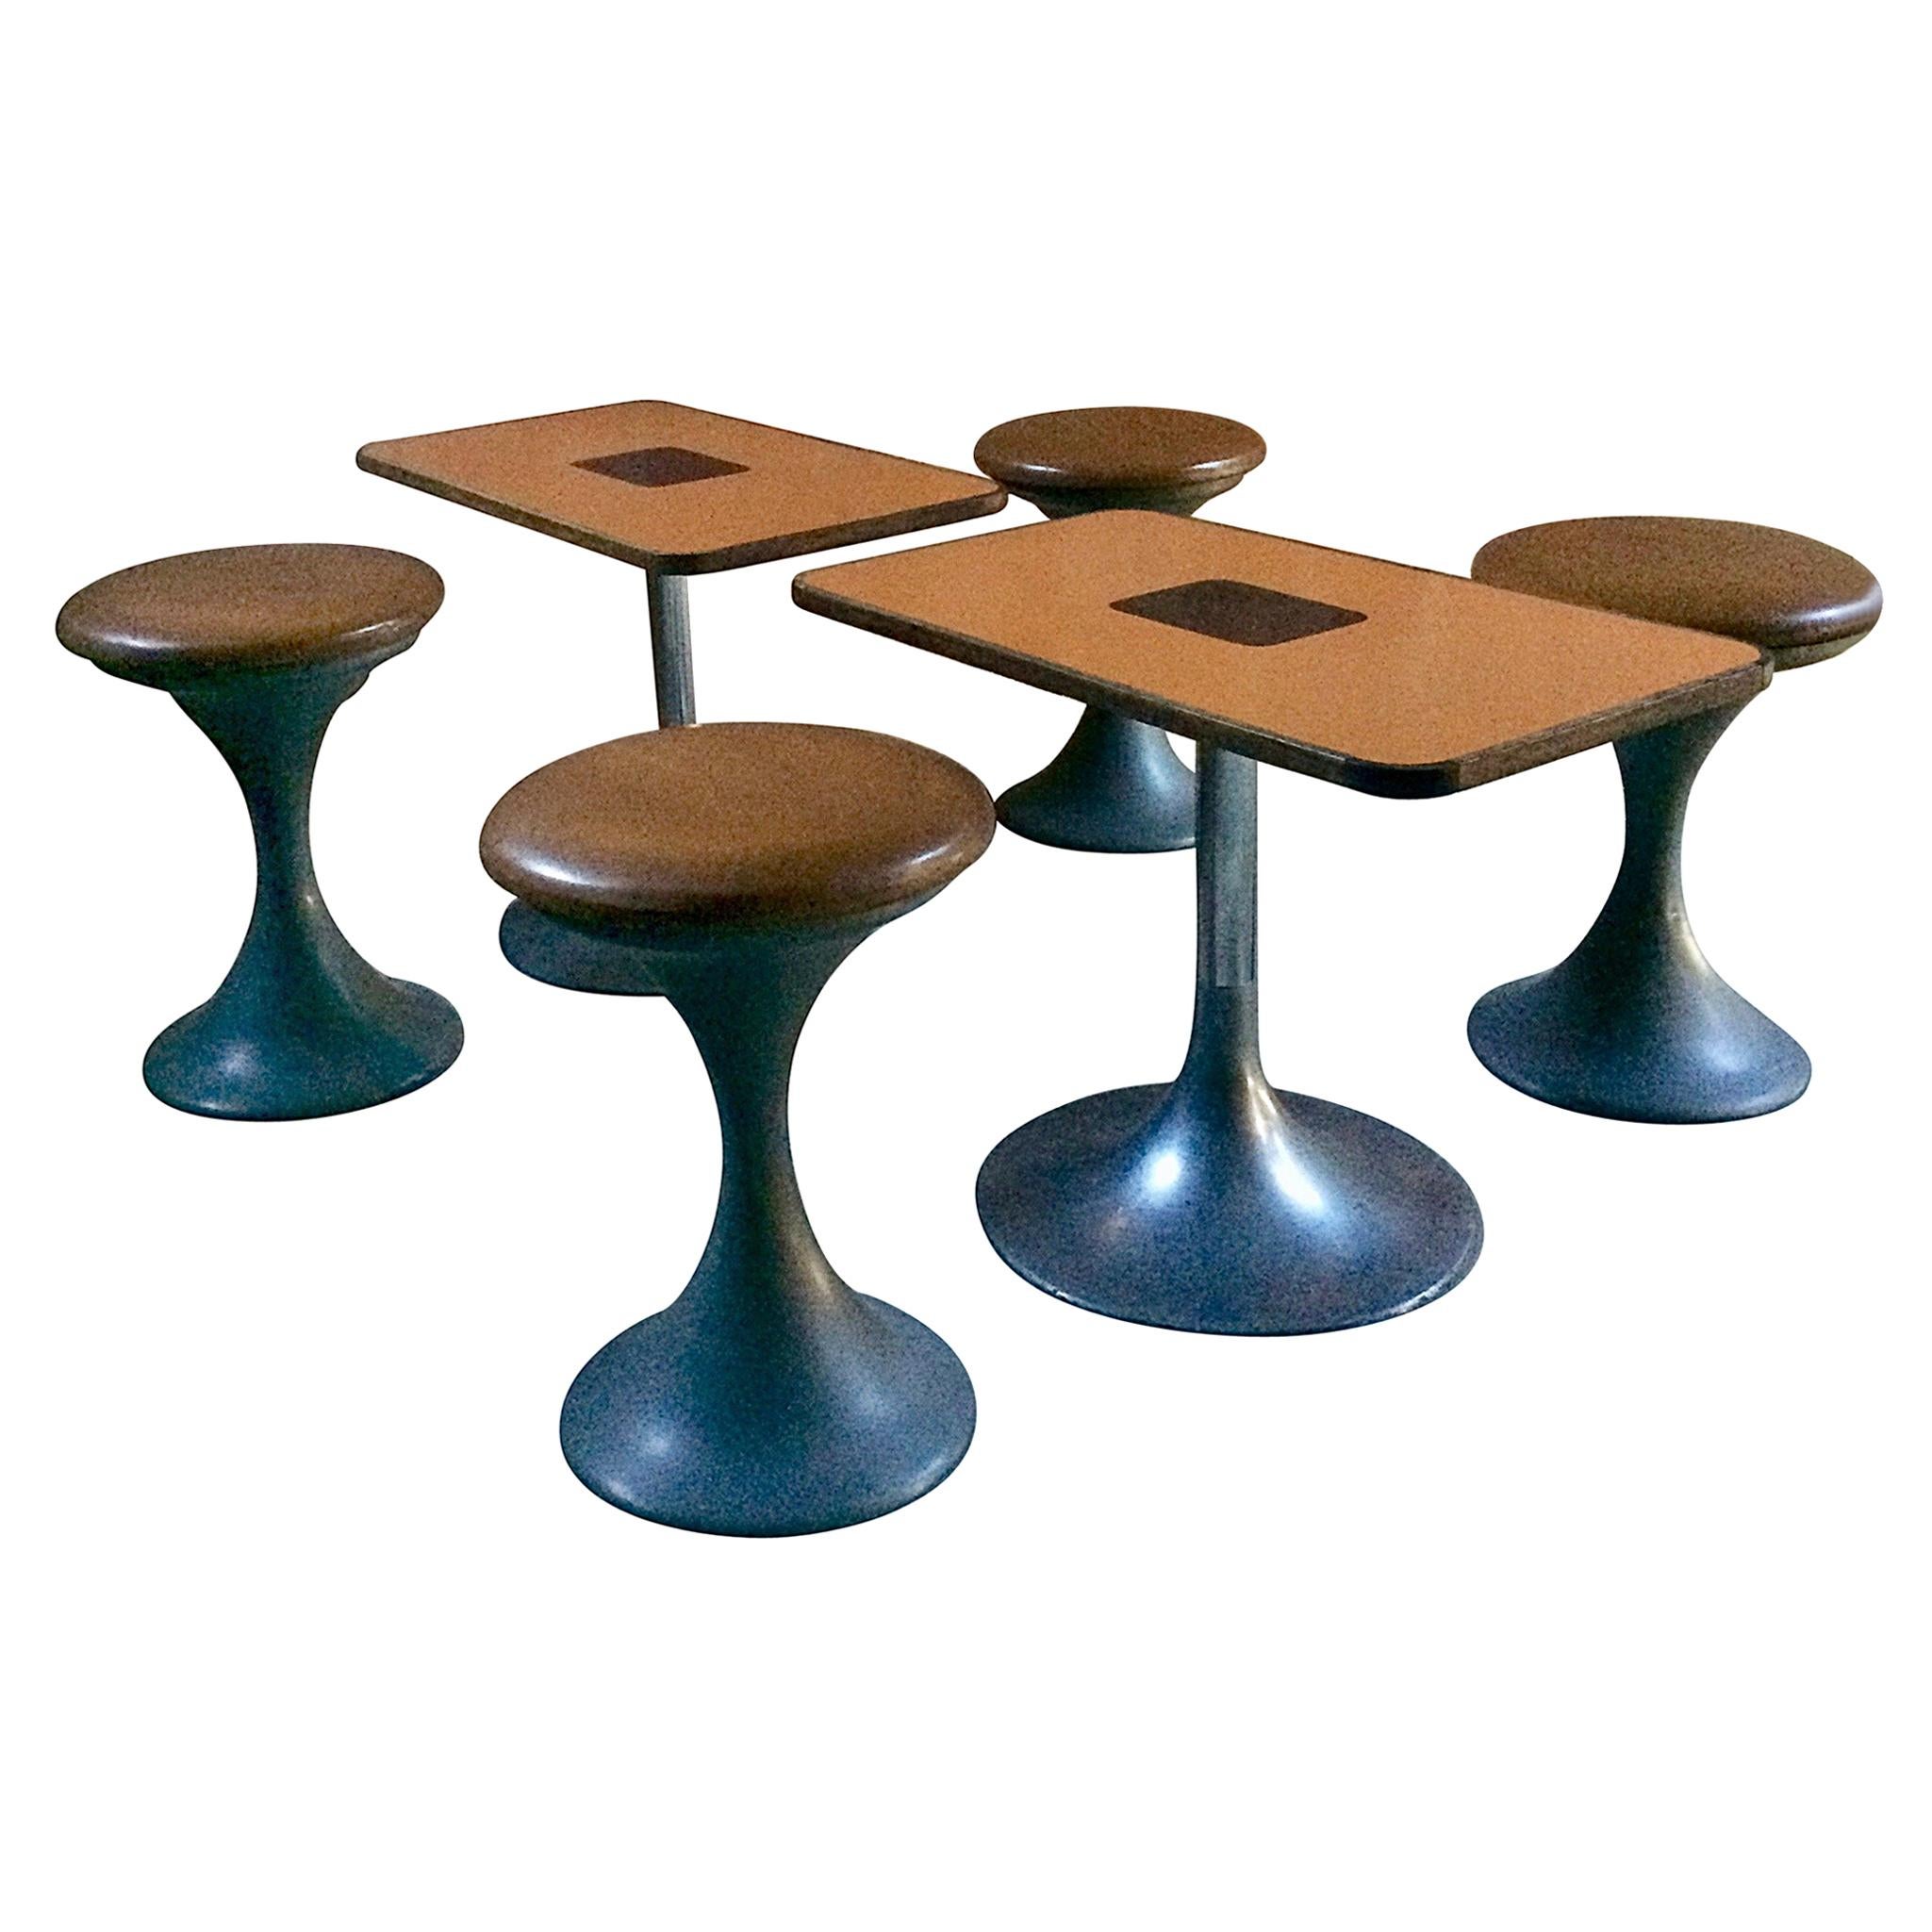 Midcentury Tulip Table and Stools 1960s Coffee Table Tulip Chairs Vintage Danish